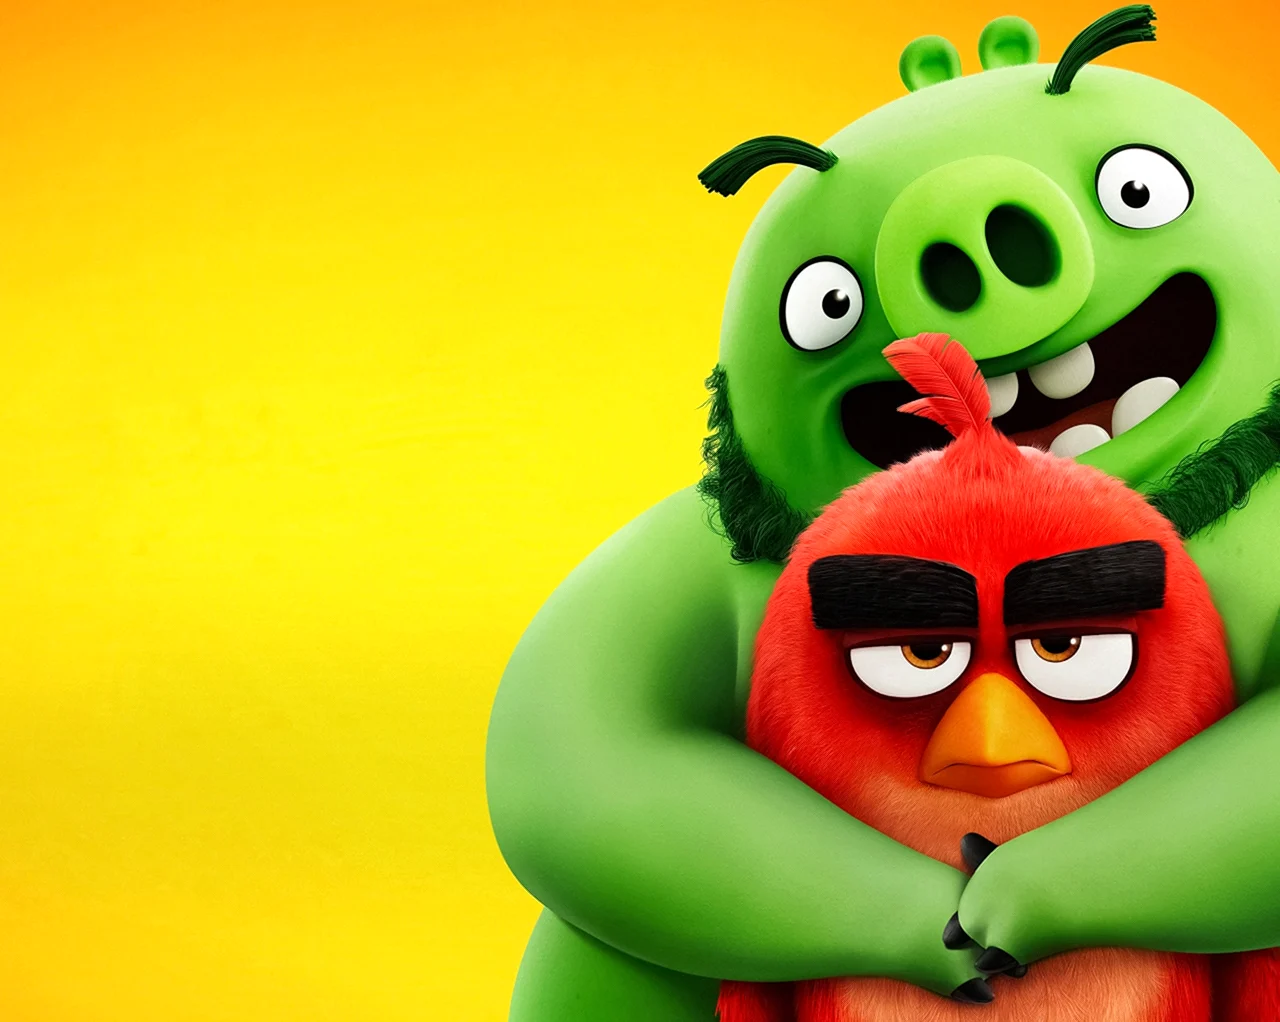 Angry Birds 2 Леонард. Картинка из мультфильма